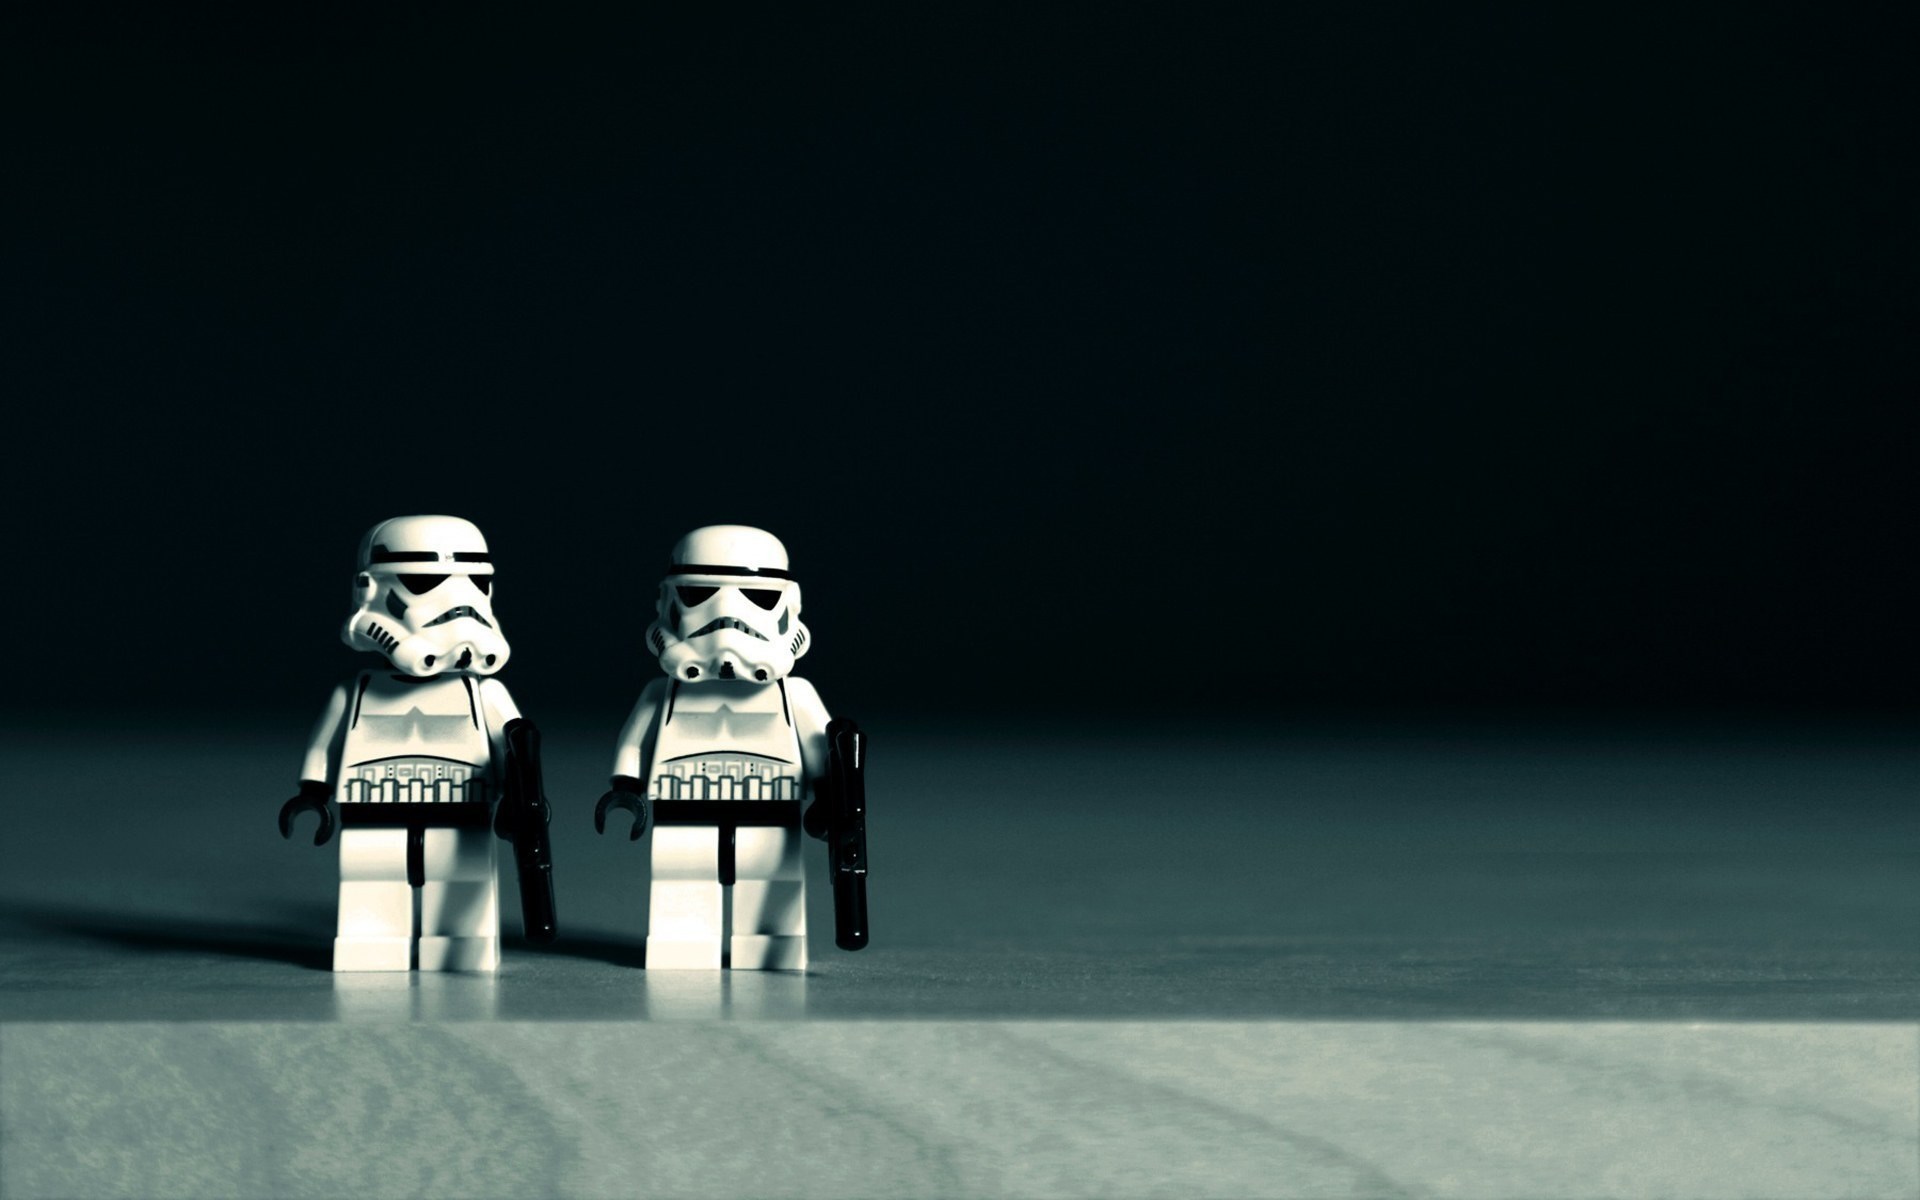 Image - Star wars stormtroopers toys macro lego hd wallpaper